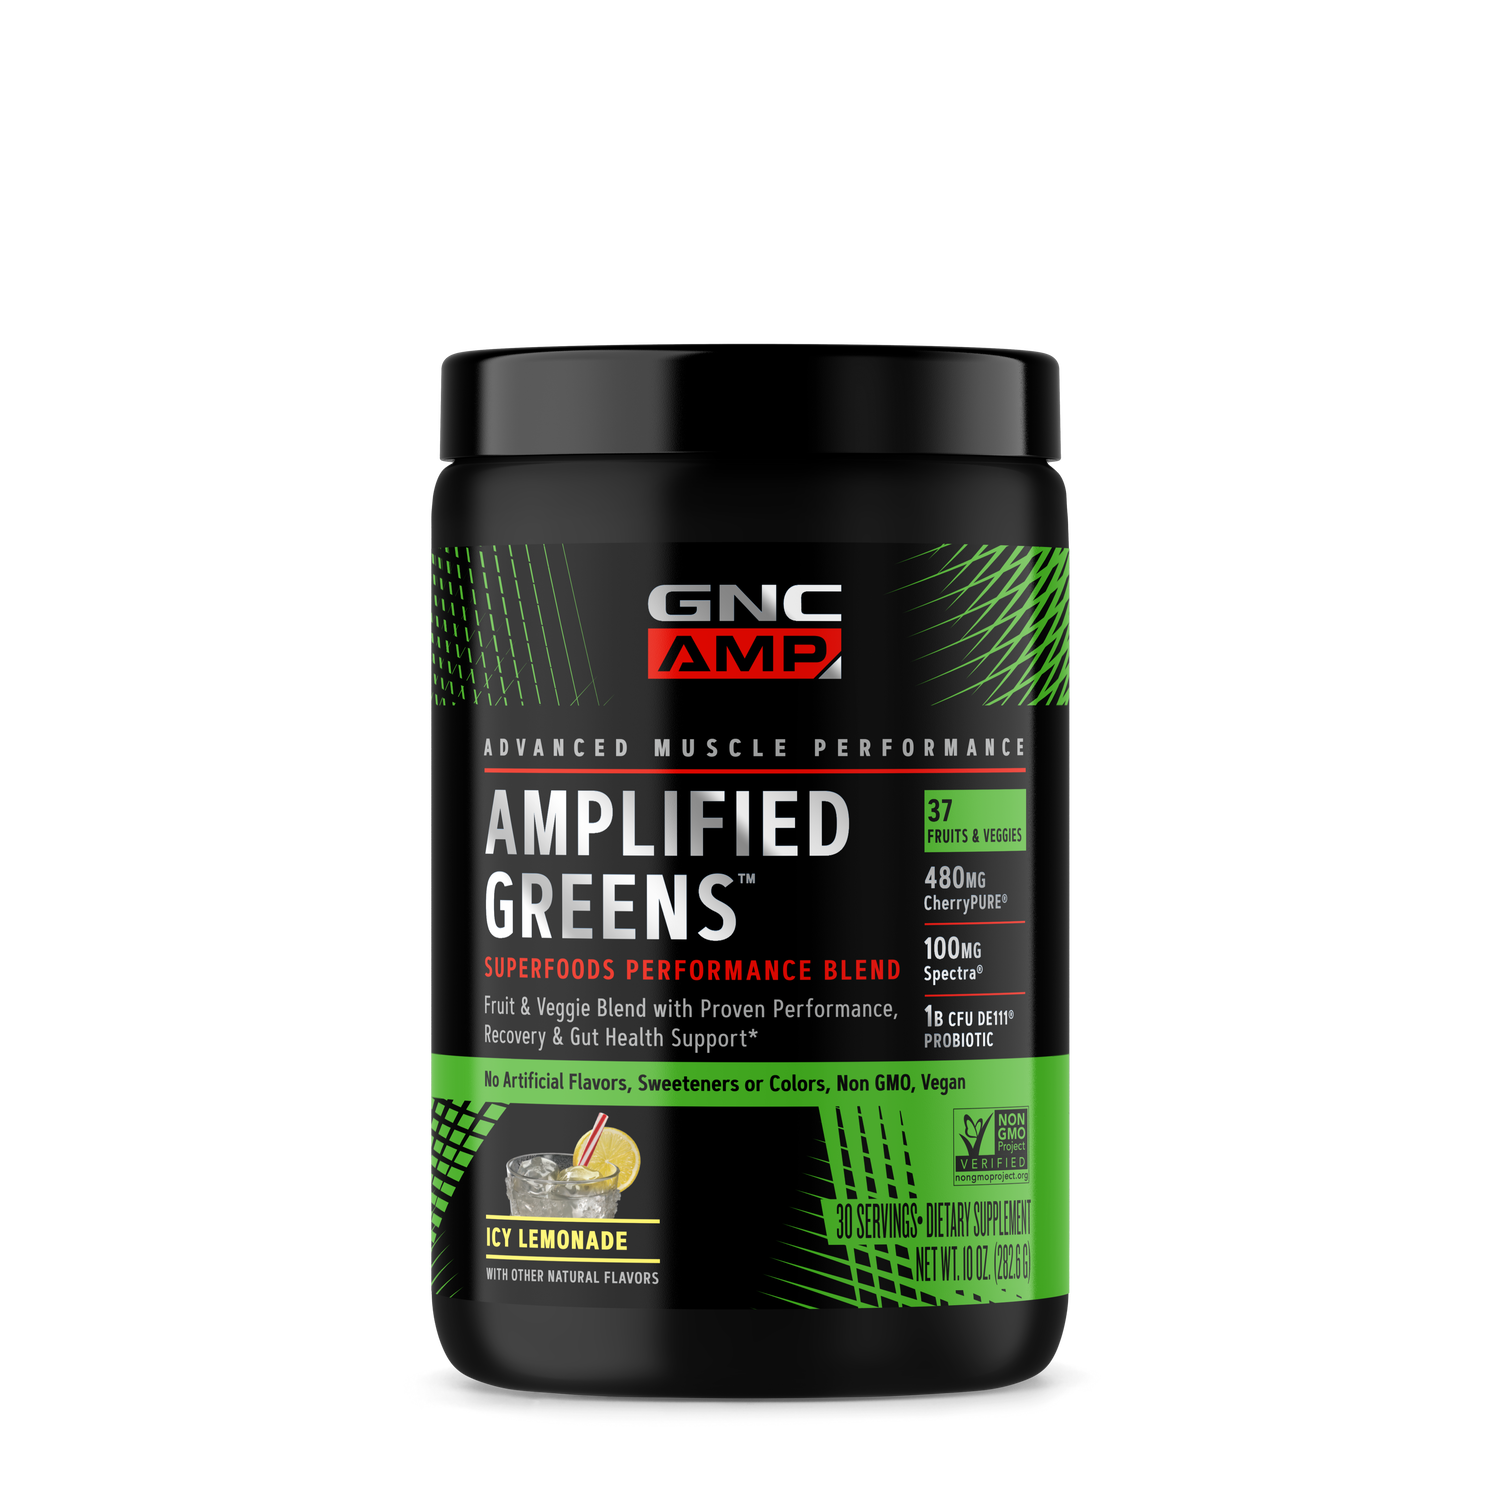 GNC AMP Amplified Greens Superfoods Performance Blend Healthy - Icy Lemonade Healthy - 10 Oz. (30 Servings)